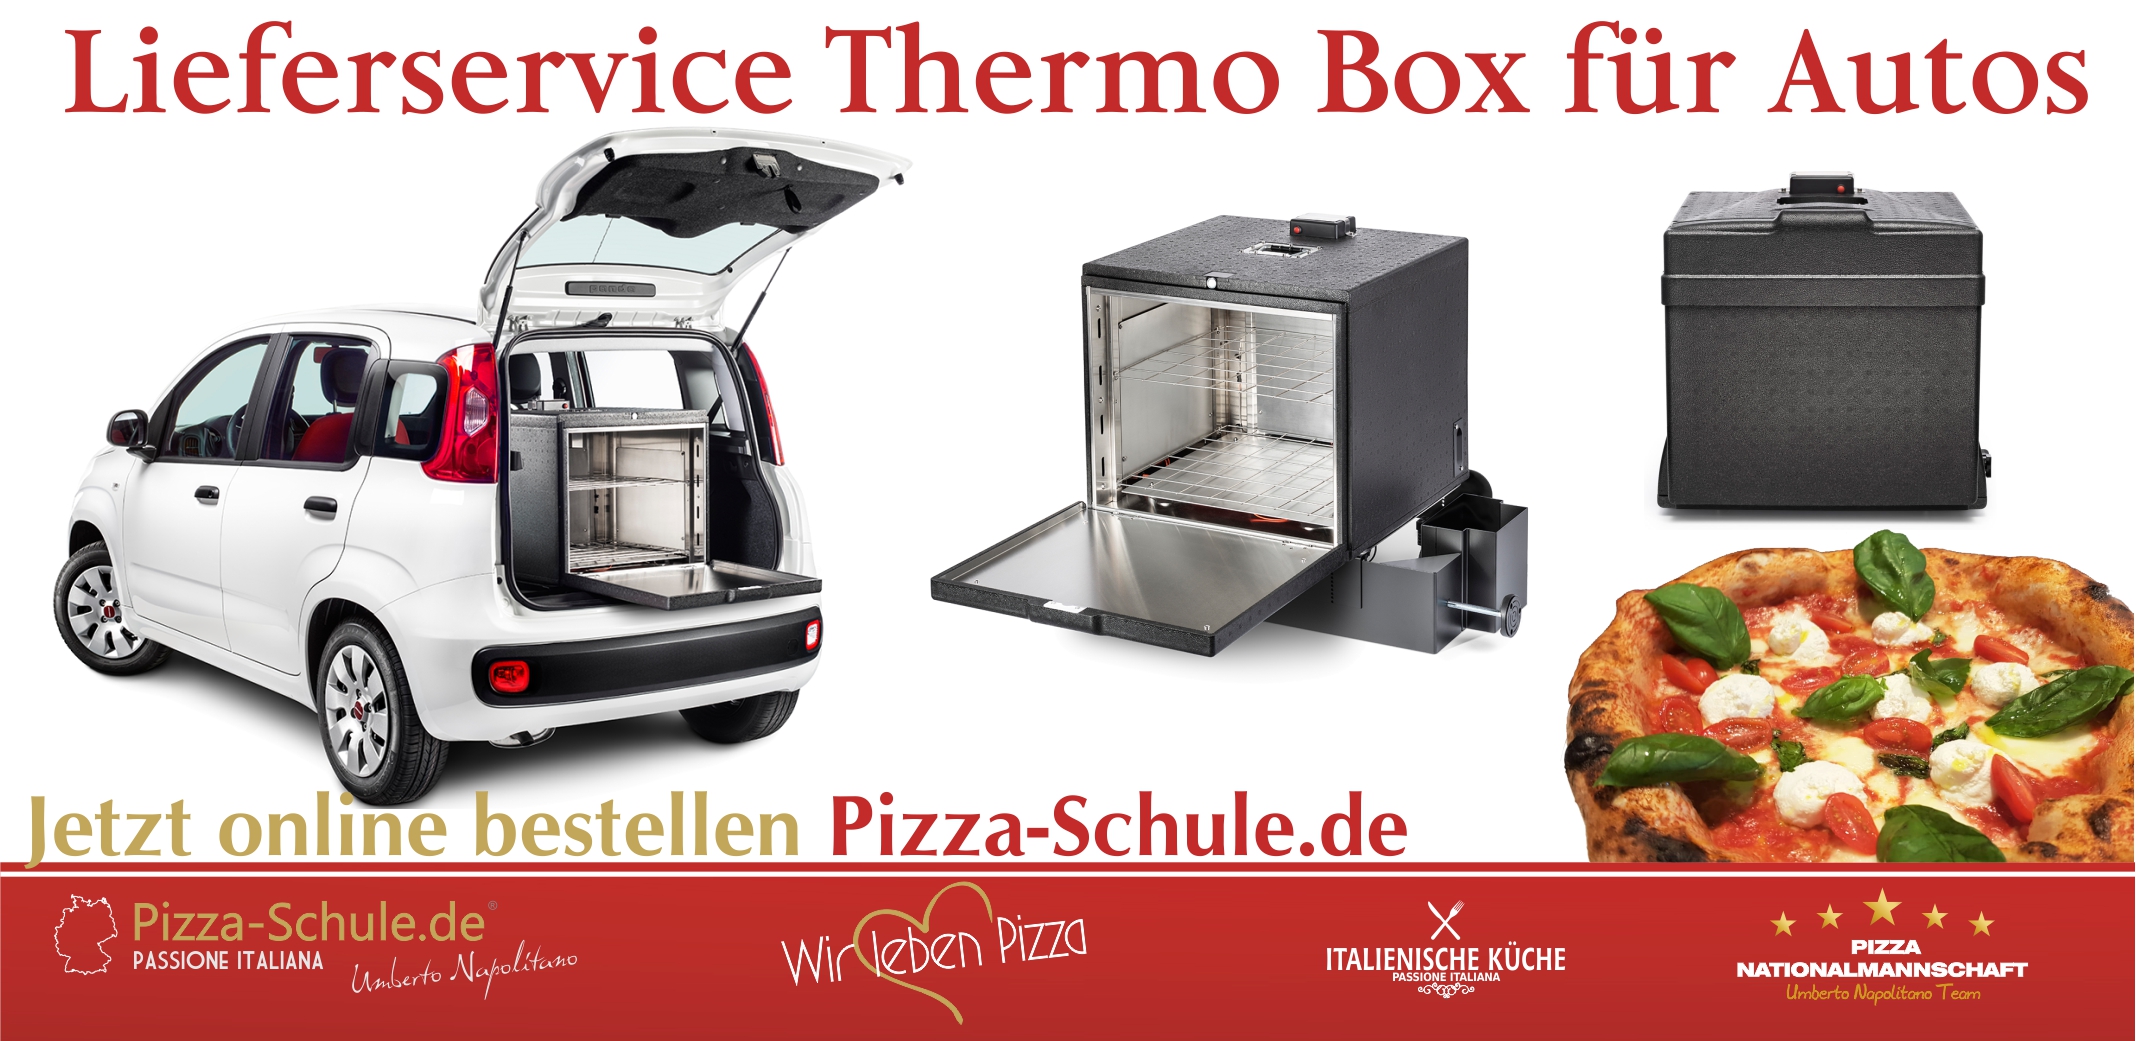 Lieferservice Thermo Box Pizza für Autos 2020